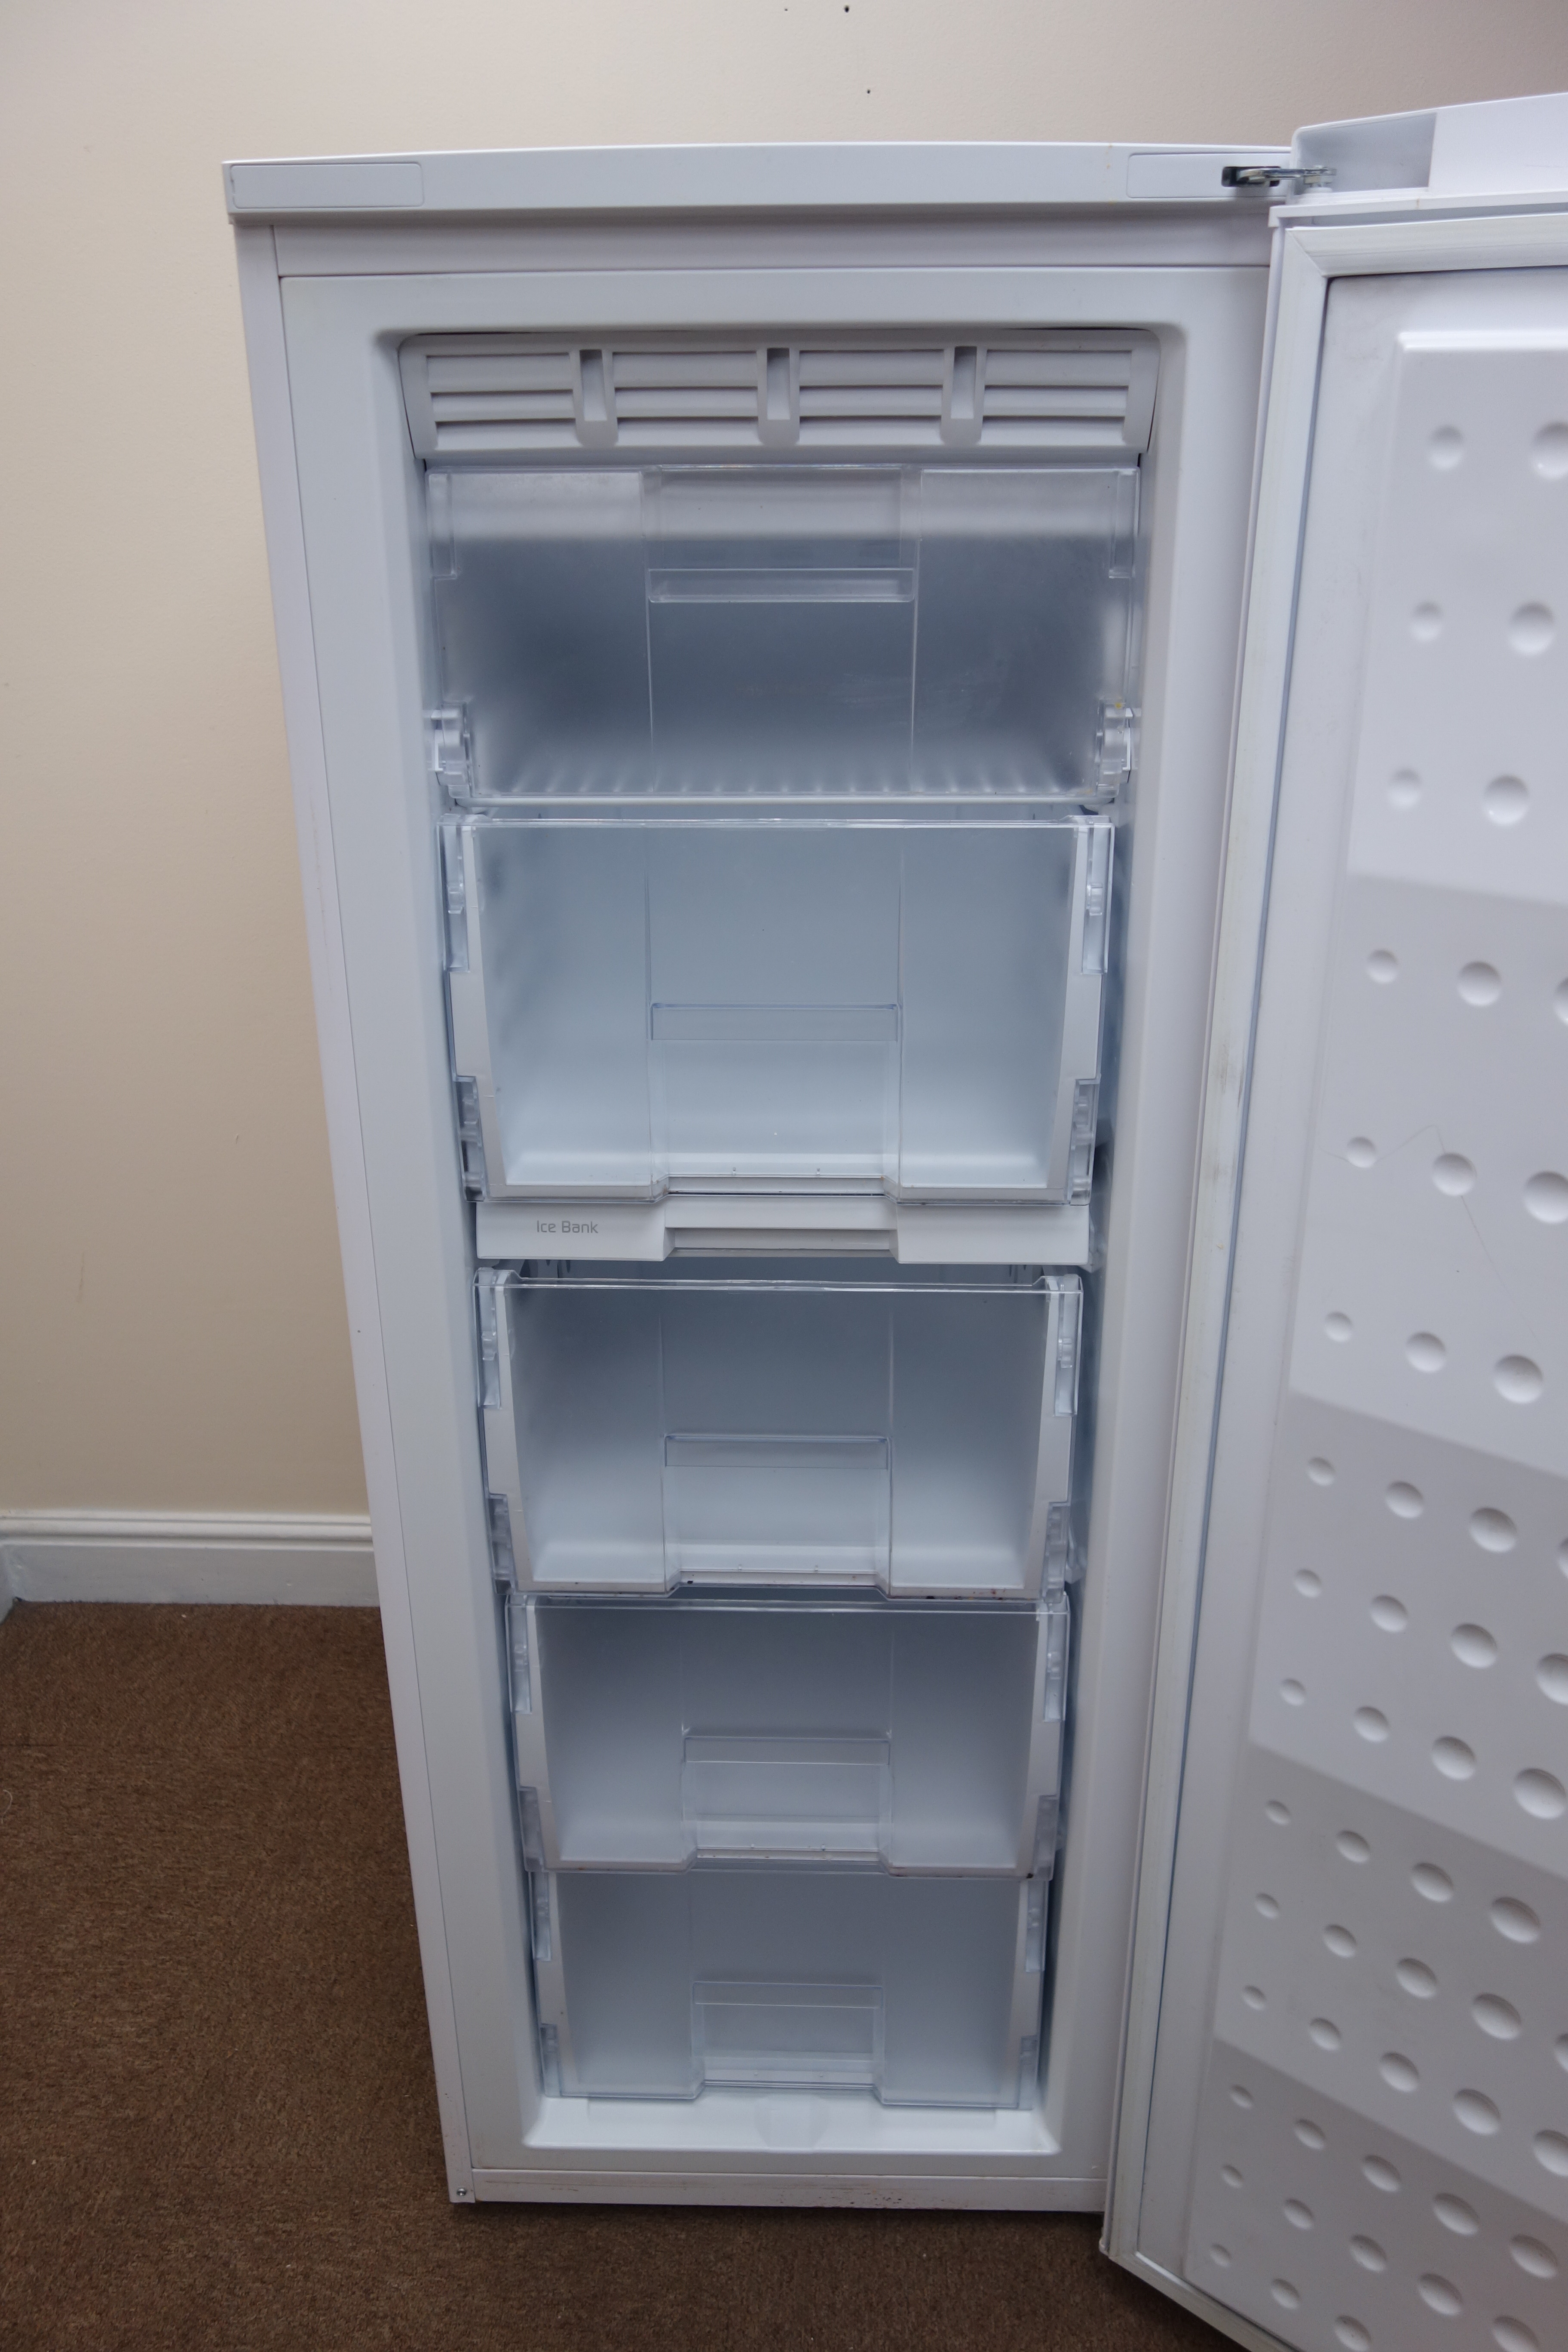 Beko TZDA504FW larder freezer, W55cm, H146cm, - Image 2 of 2